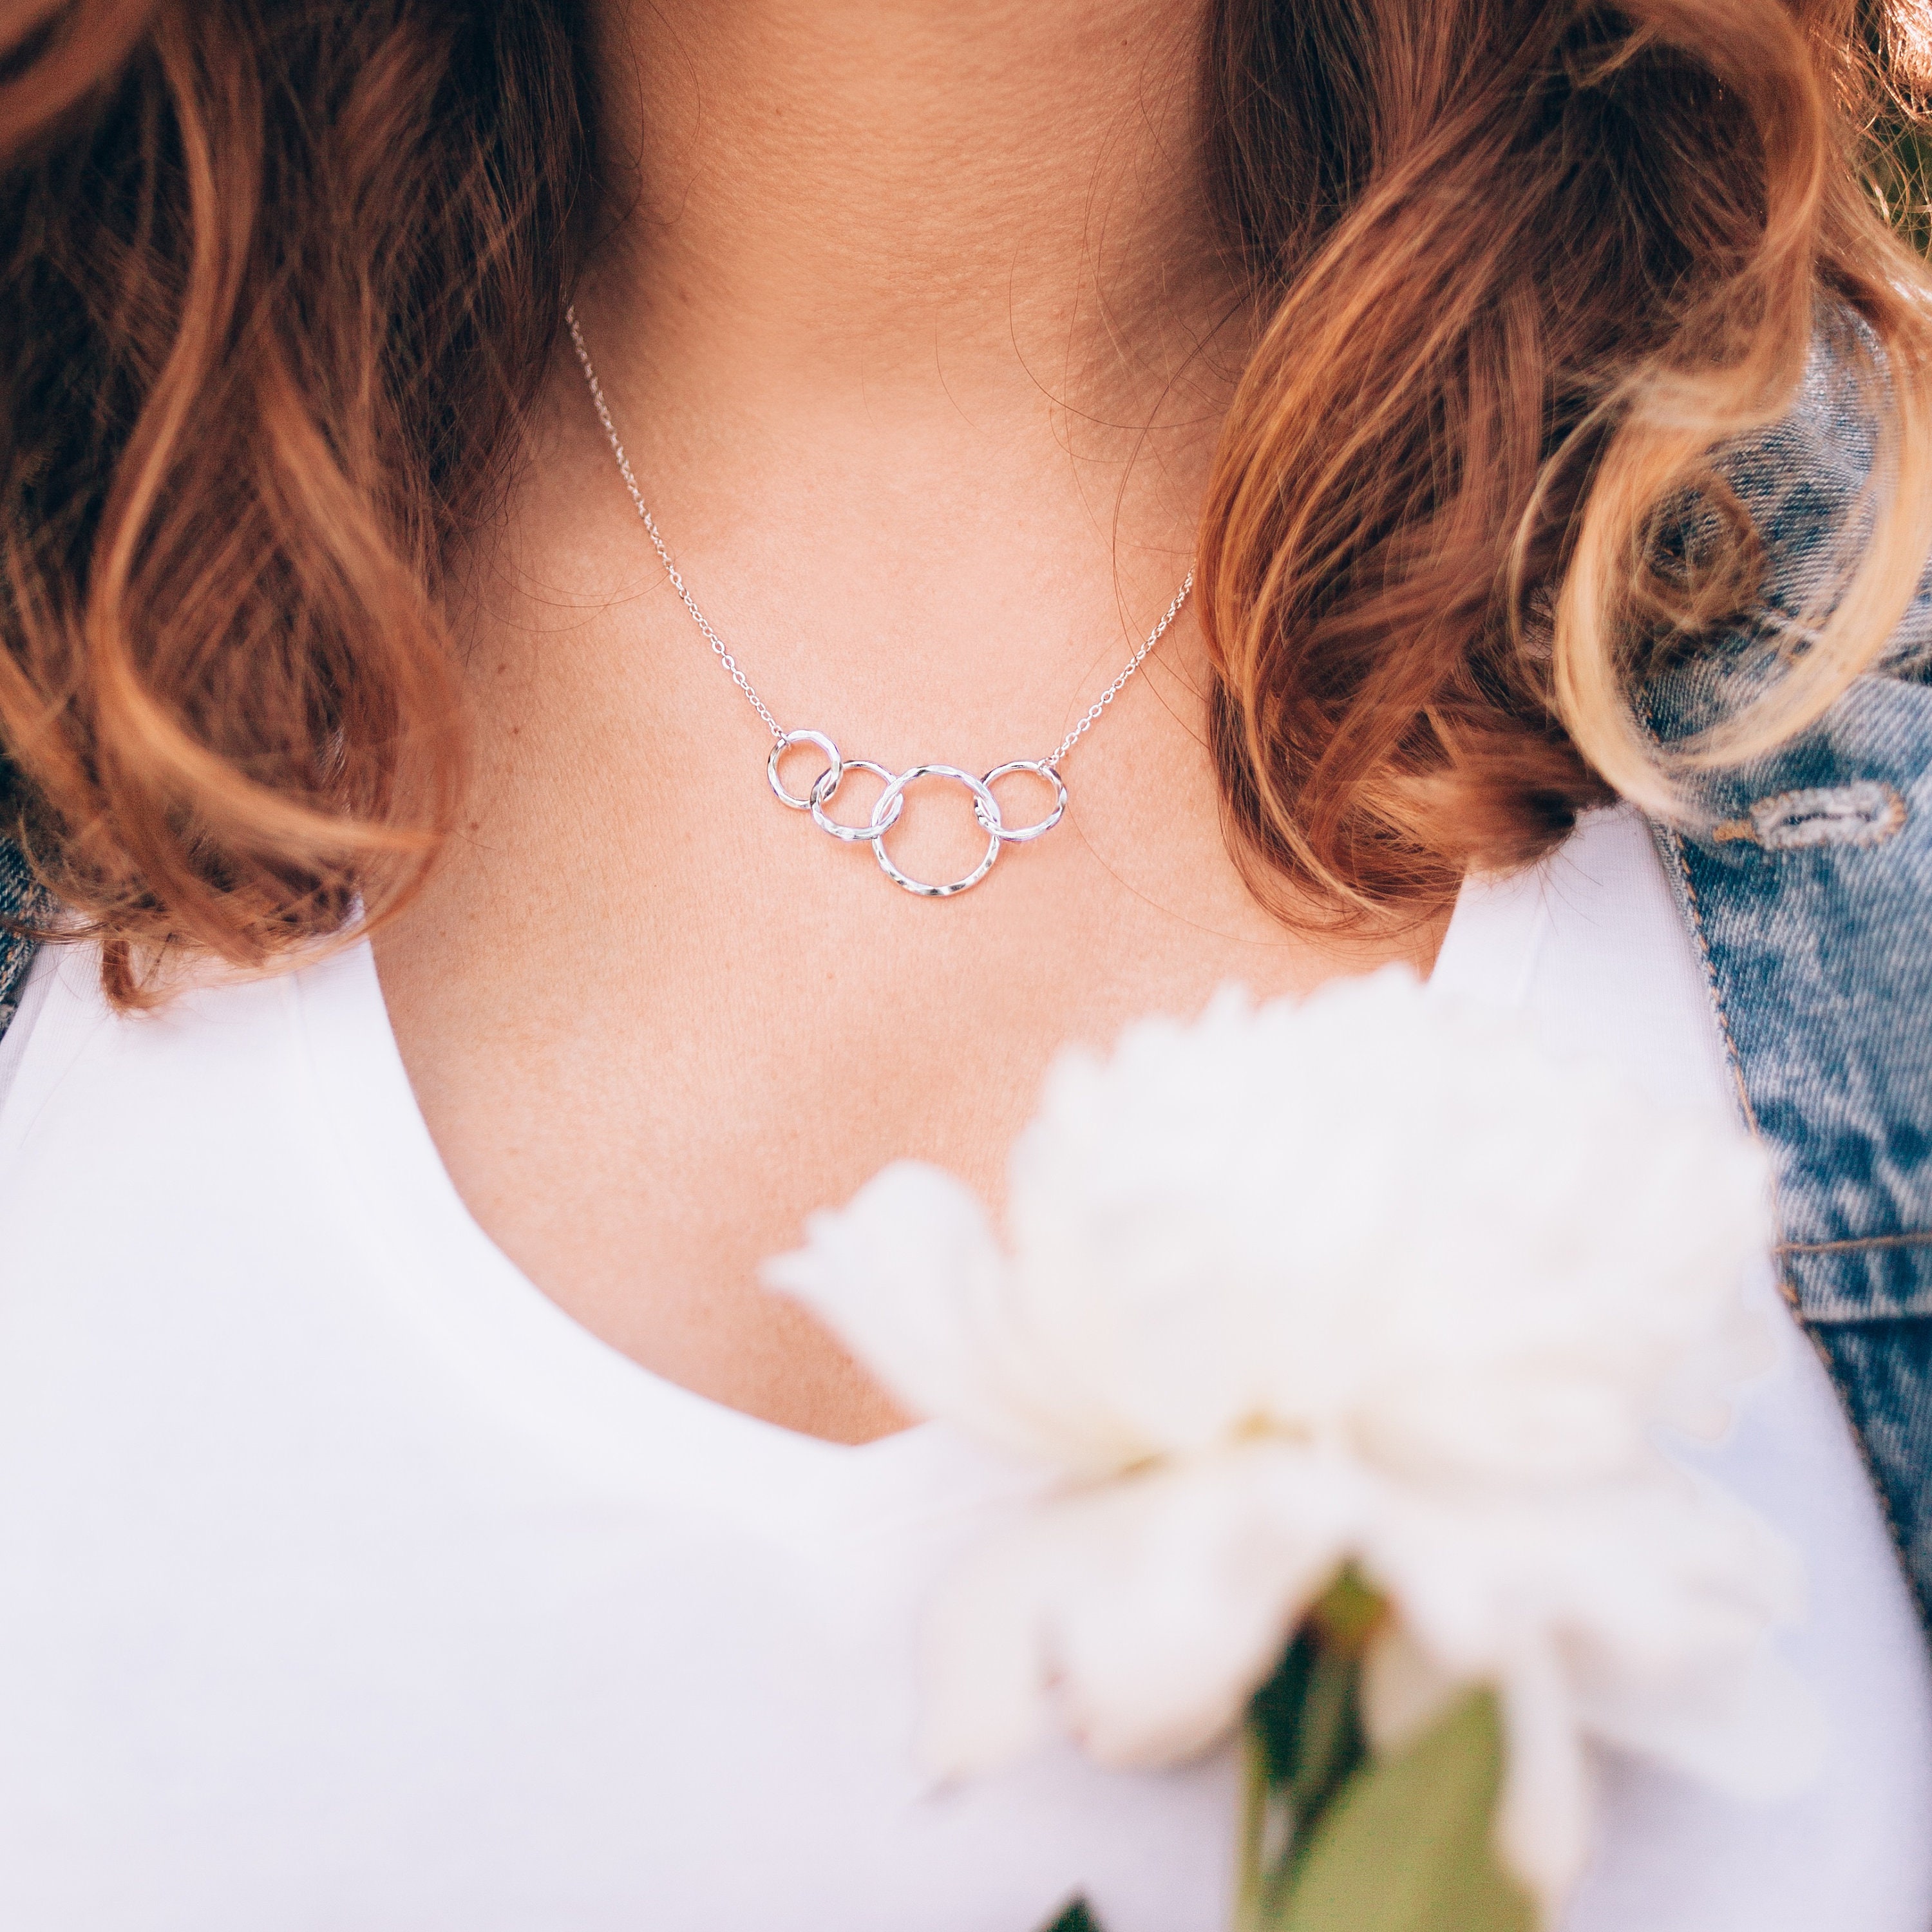 Interlocking circle necklace birthday gift for women